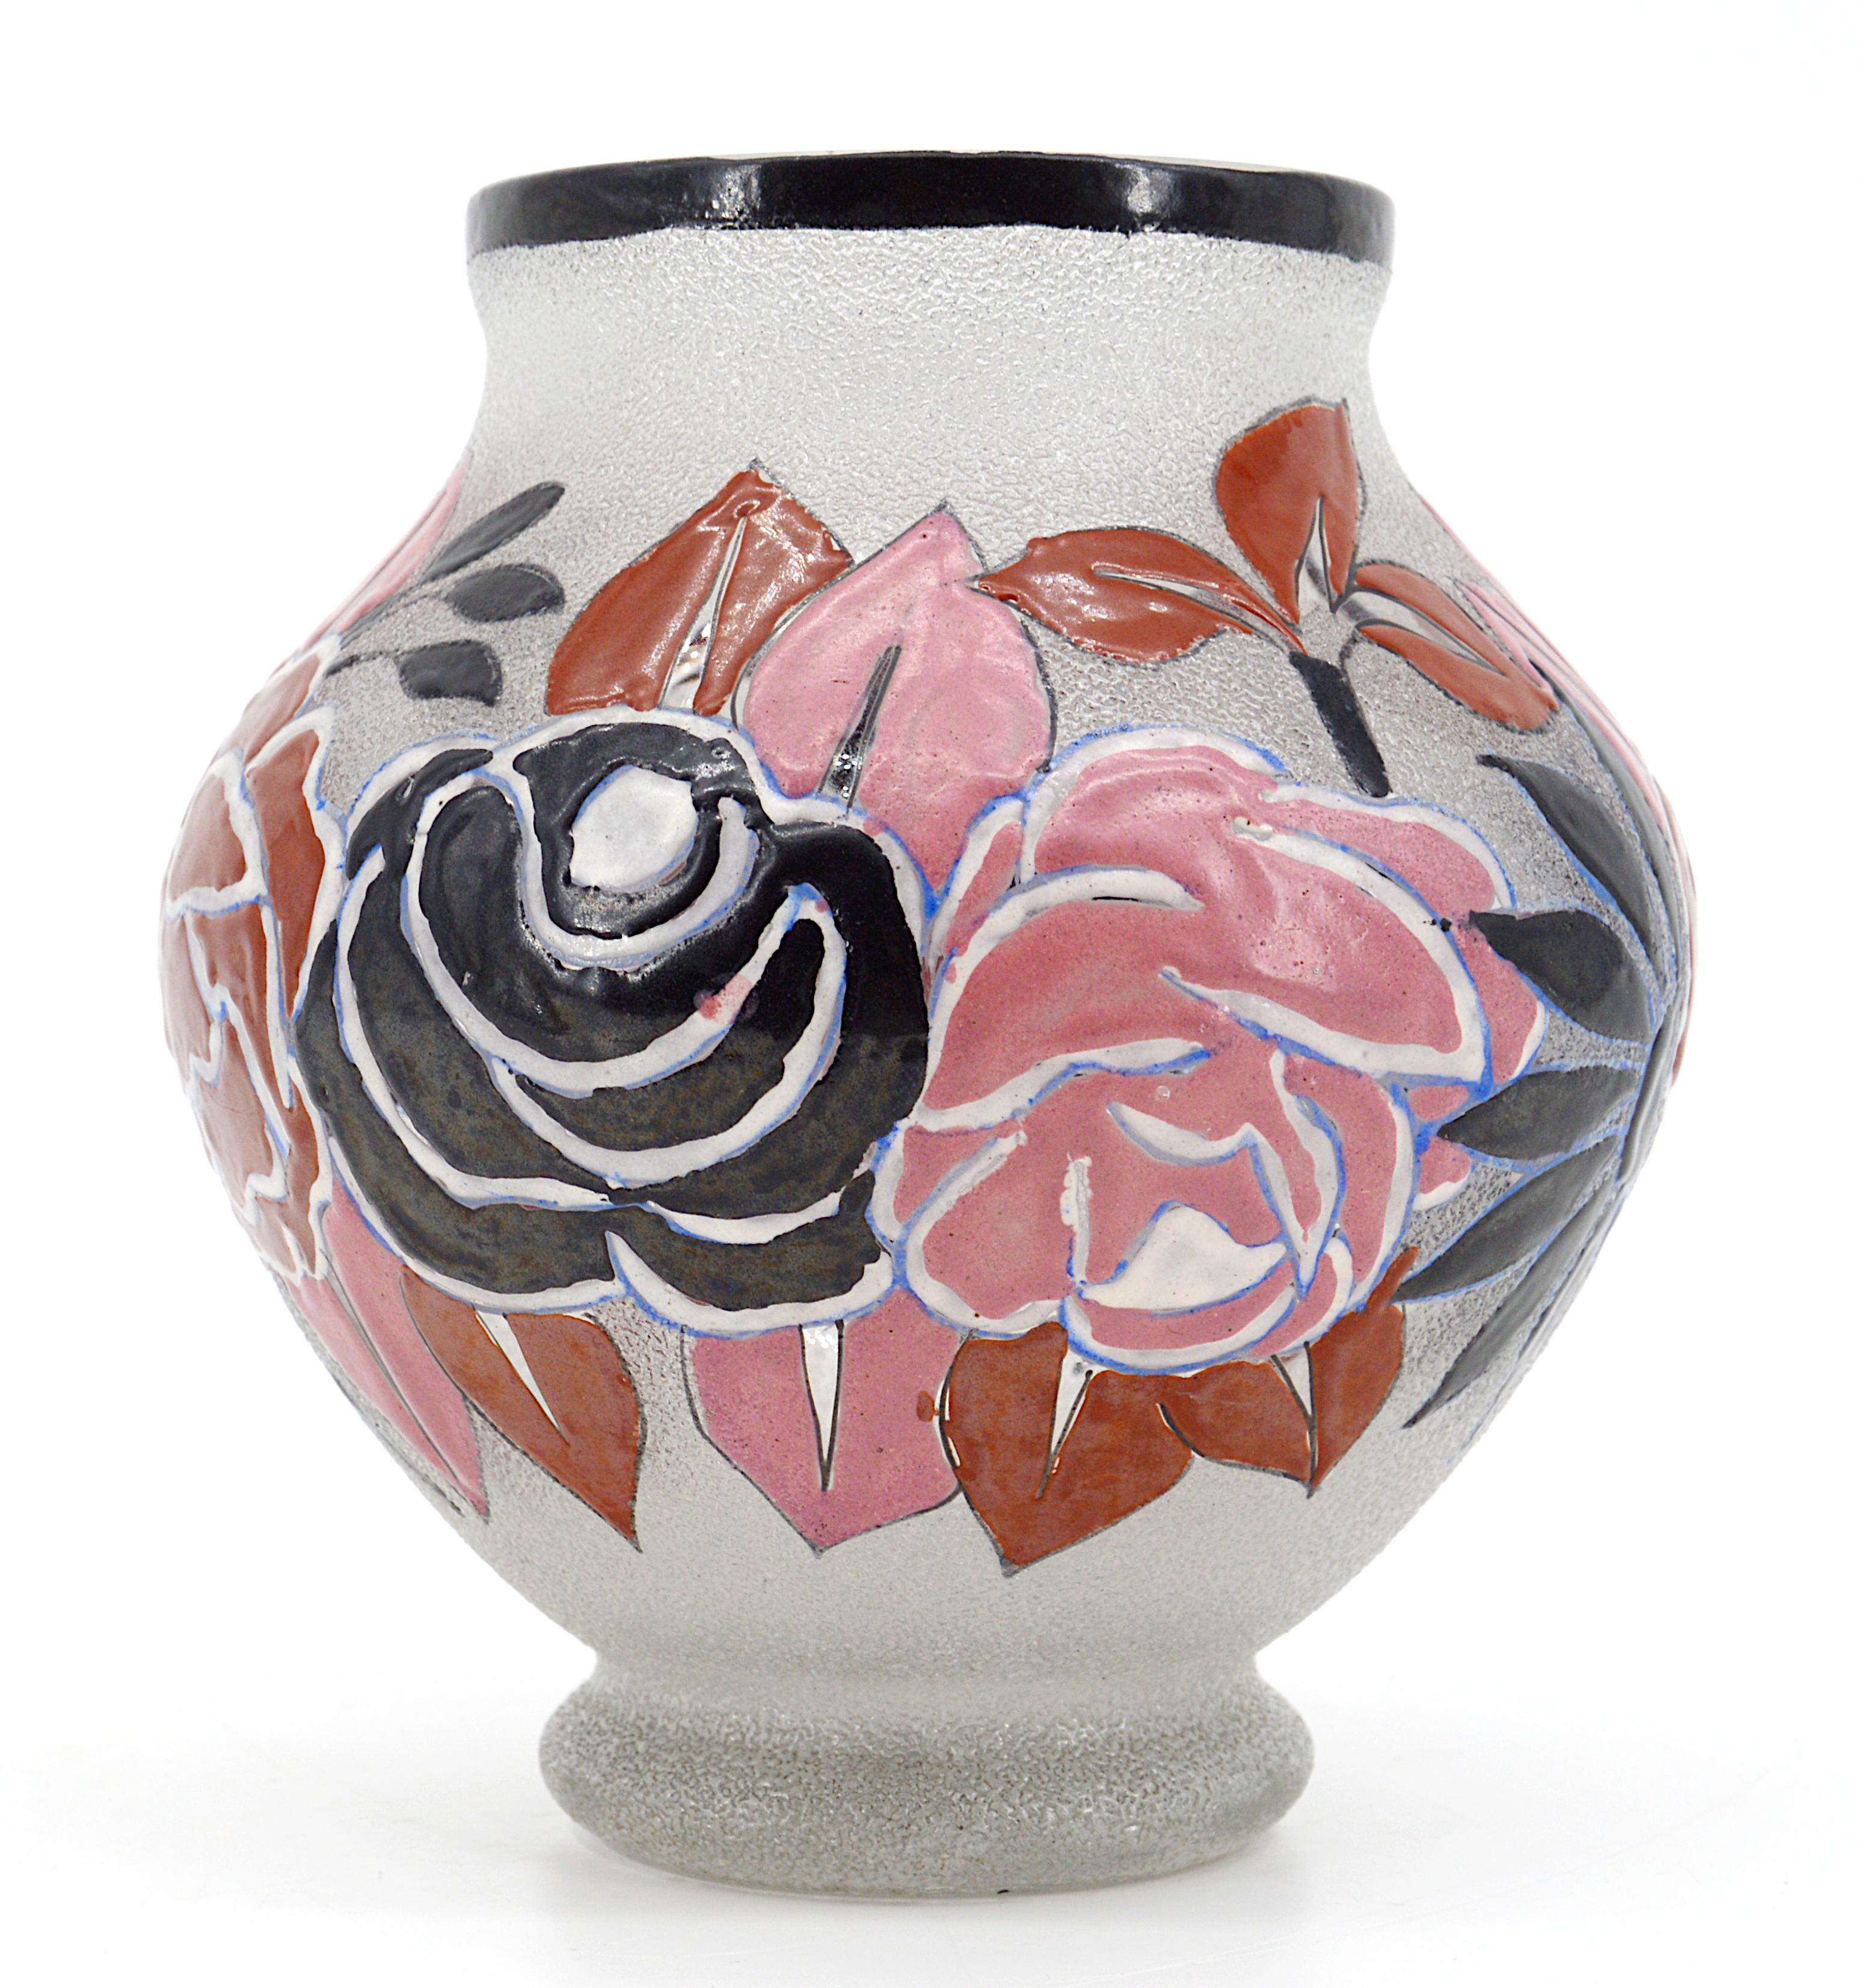 Enameled glass vase by Adrien Mazoyer (1887-1950), Moulins, France, 1920s. Richly enameled large roses. Measures: Height : 6.9